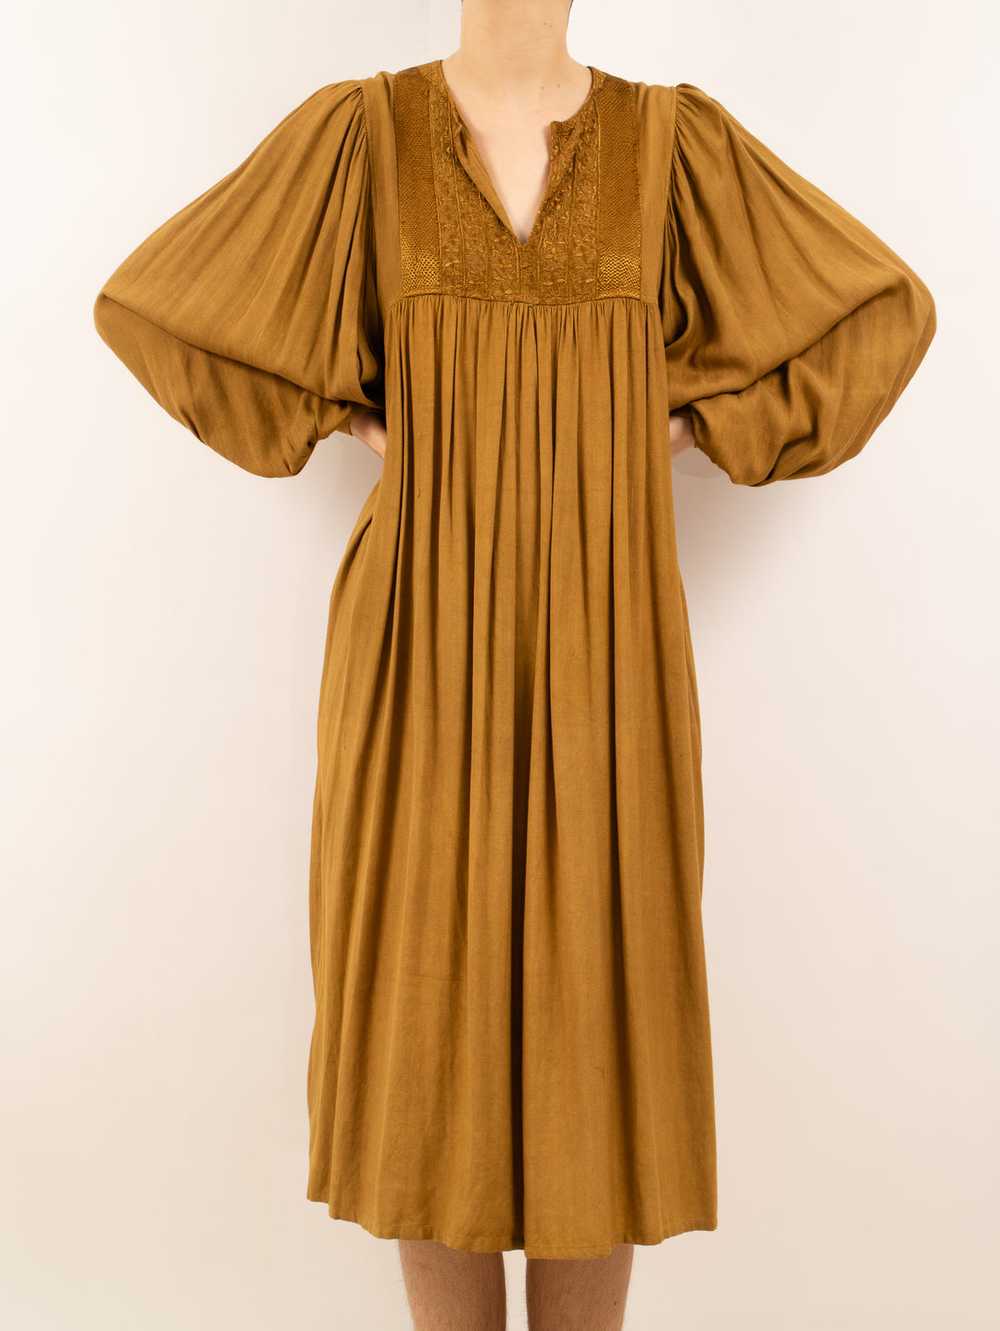 1970's golden caftan dress - image 2